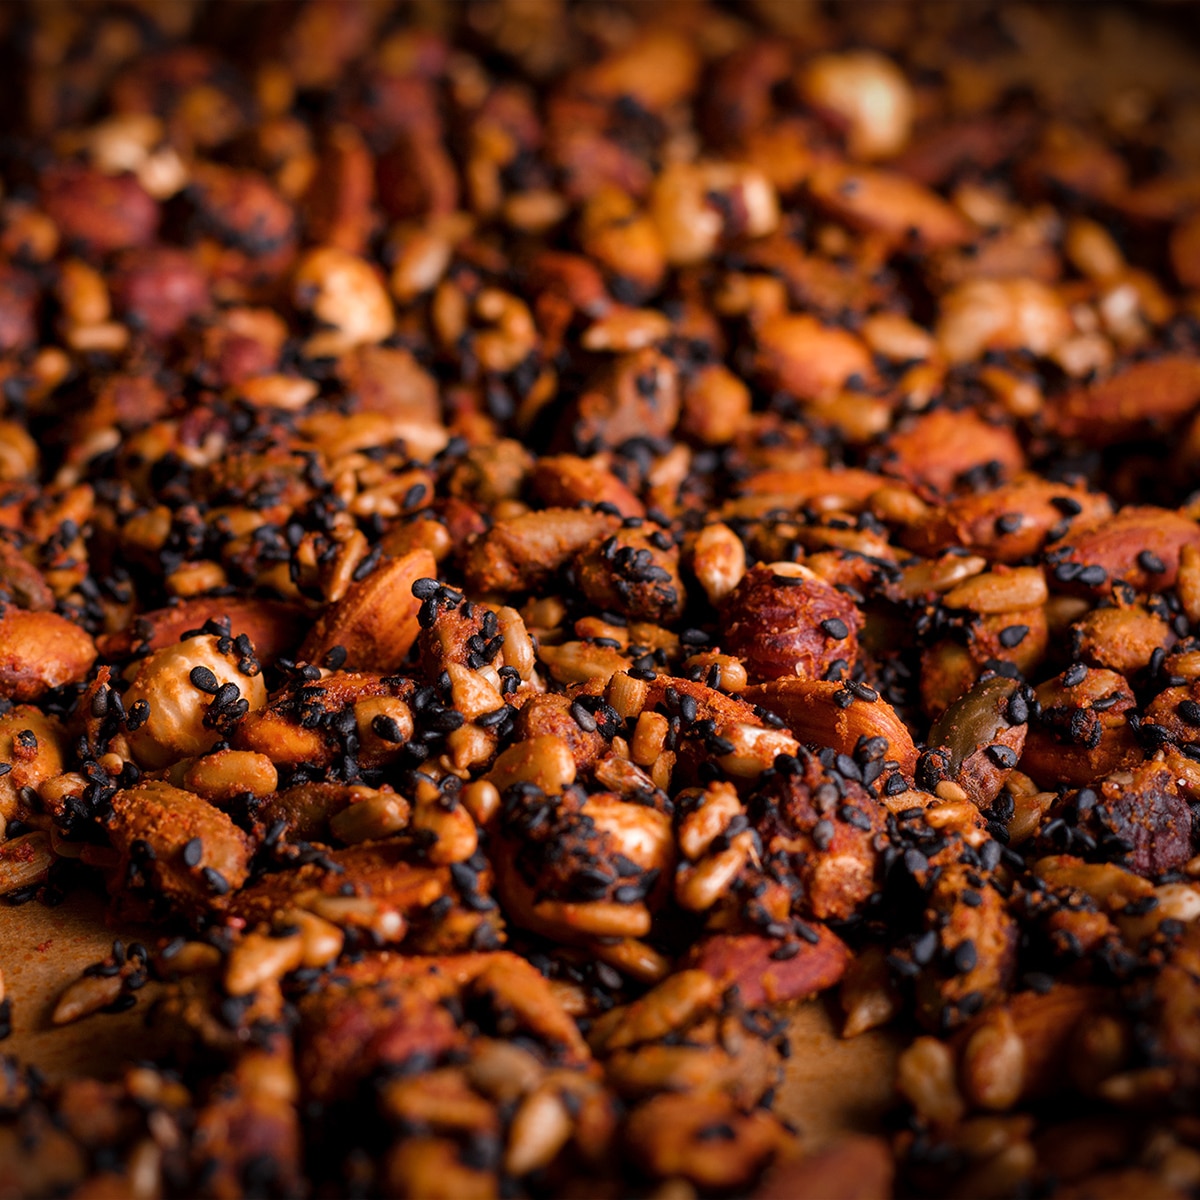 A tray of Yemenite Ja'ala, roasted, spiced nut and seeds.